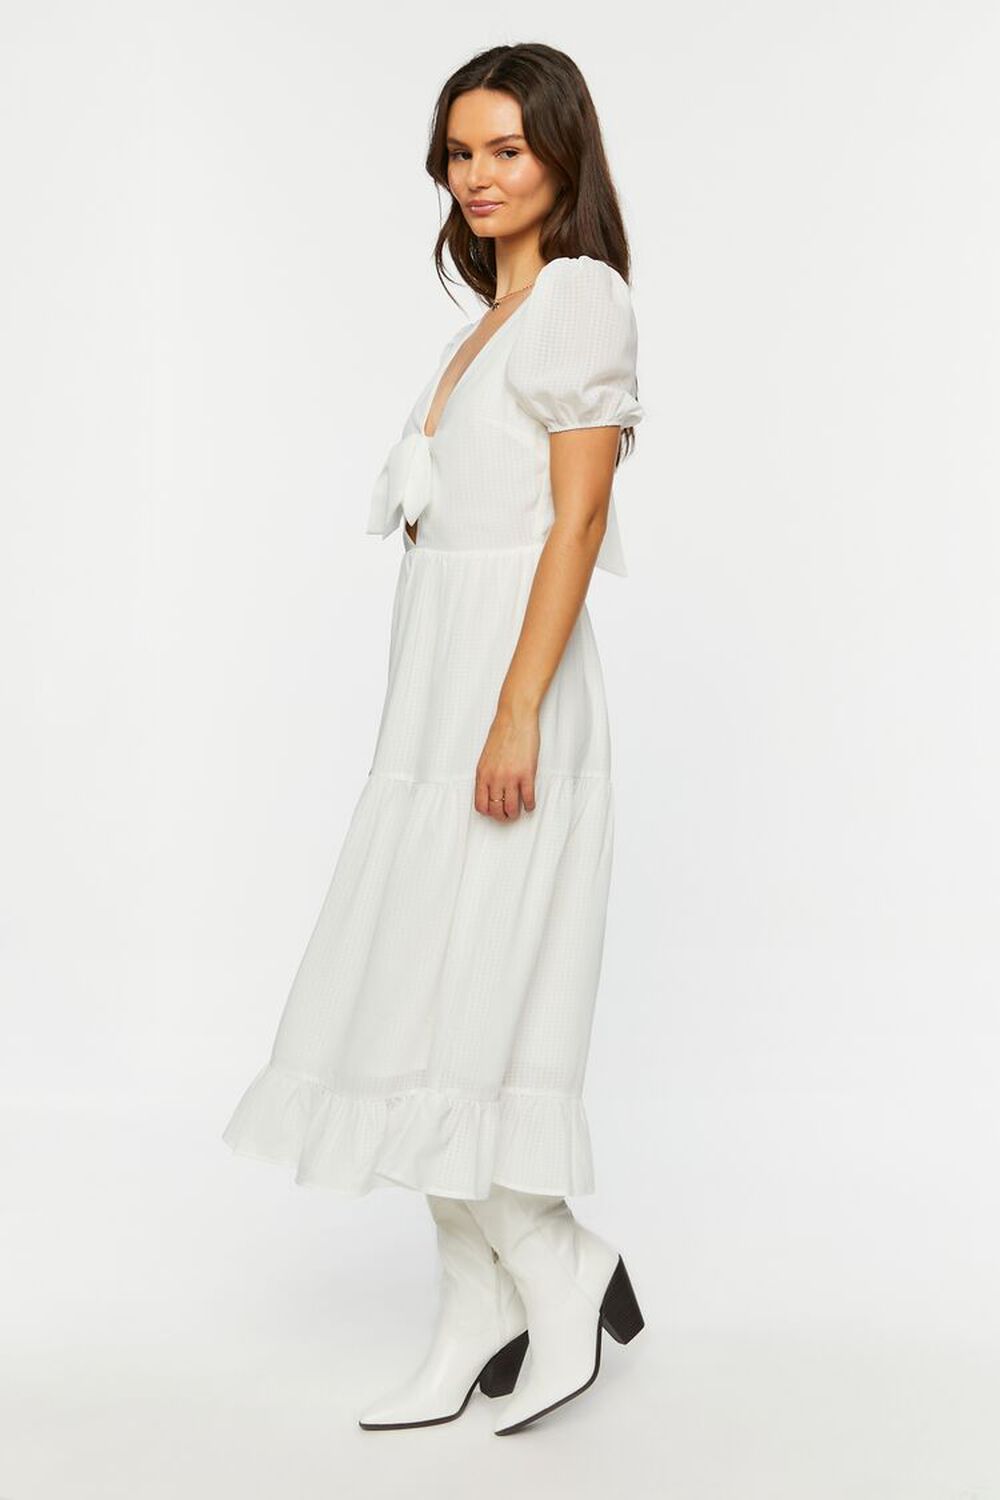 WHITE Gingham Chiffon Tiered Midi Dress, image 2